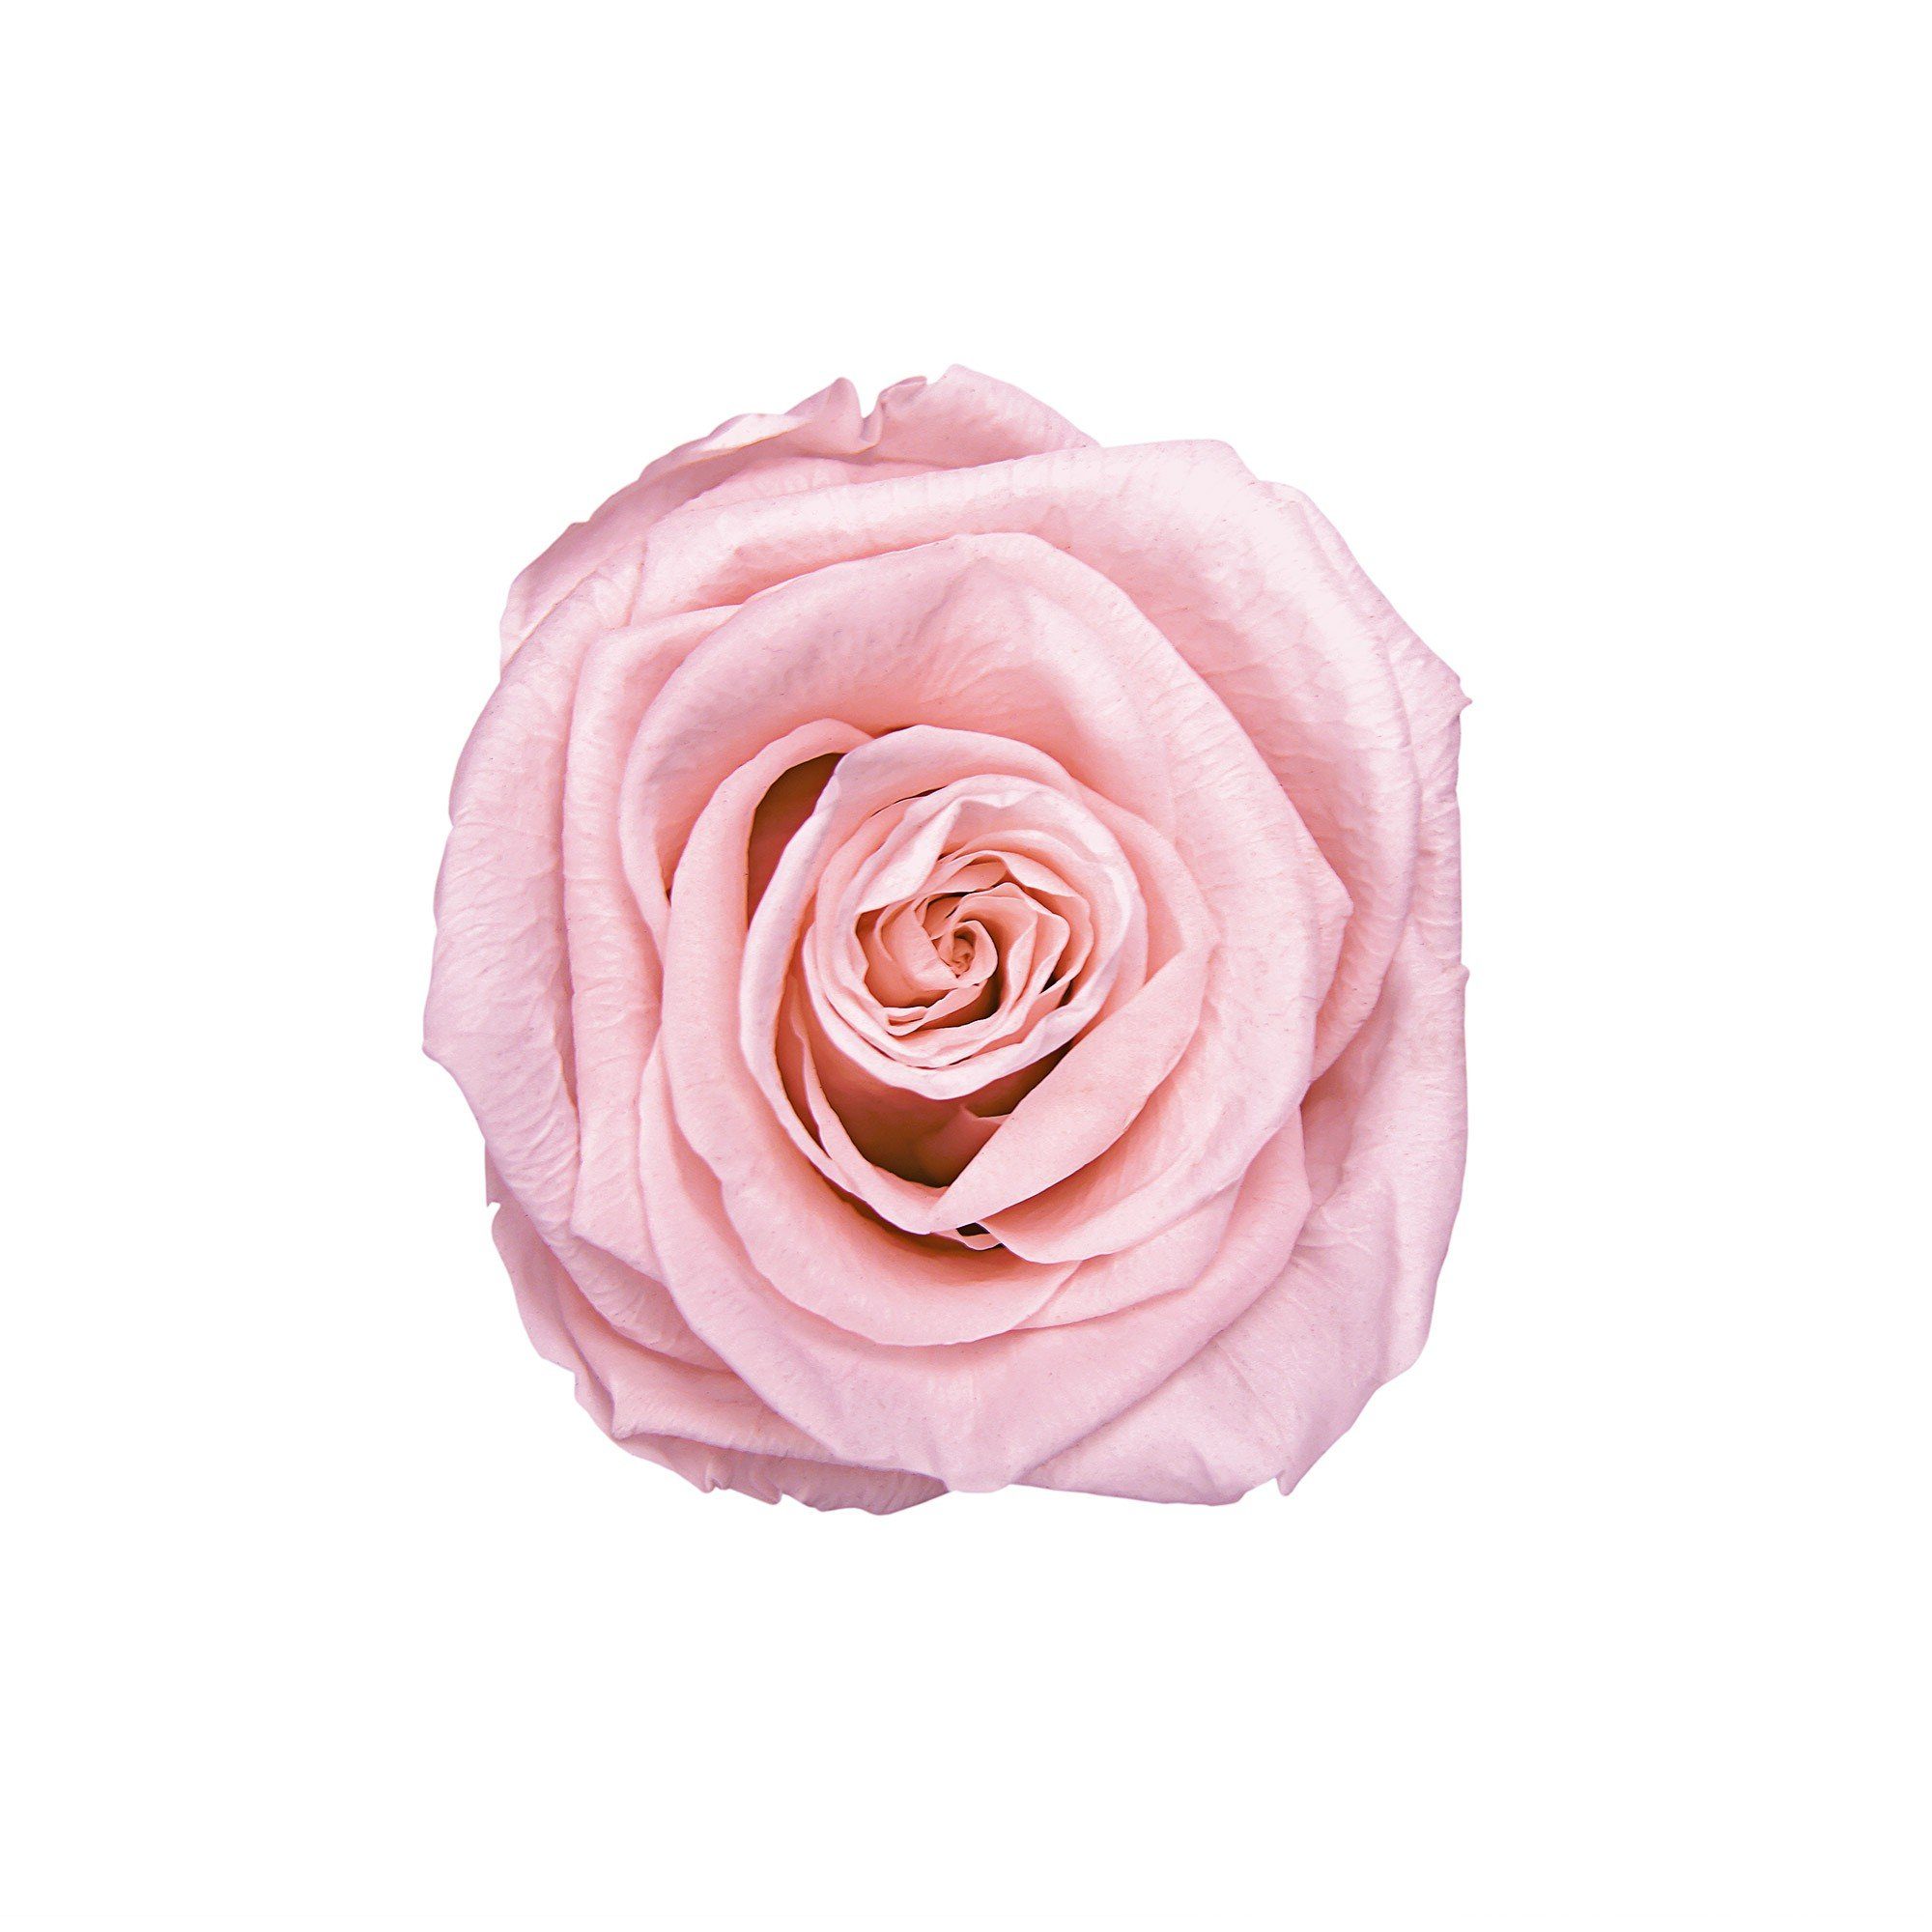 Blumen duftende cm Raul Rose Flowers, by Richter Holy 3 I Infinity Rosenbox I Rose, Pink I weiß konservierte 9 Jahre Infinity 1er Höhe Eckige in haltbar Blush mit Echte, Kunstblume